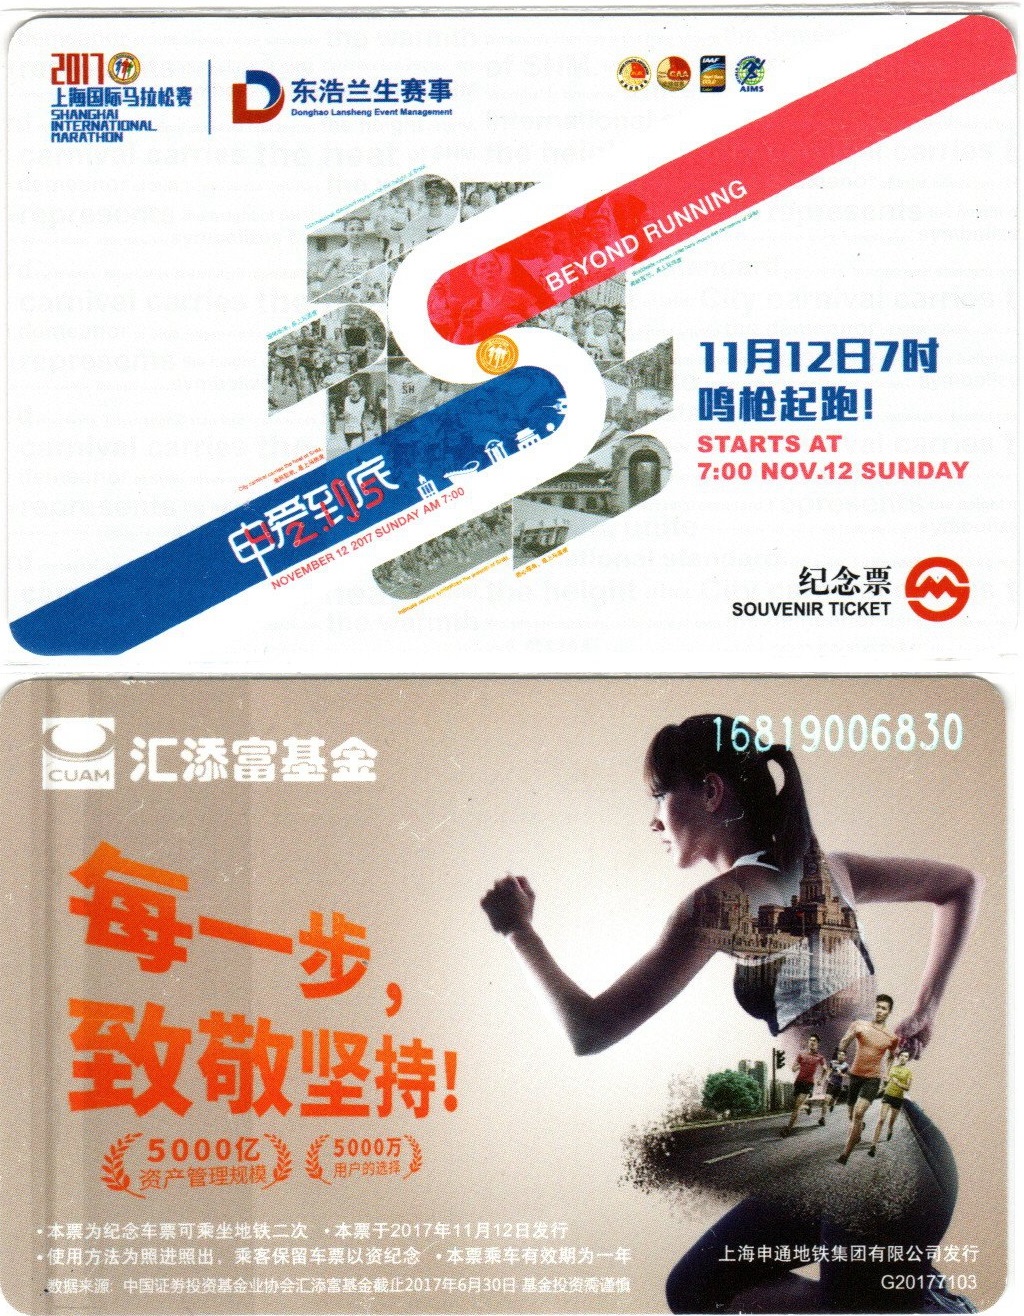 T5049, "Shanghai 2017 Marathon", Metro Card (Subway Ticket), Special 2-ways